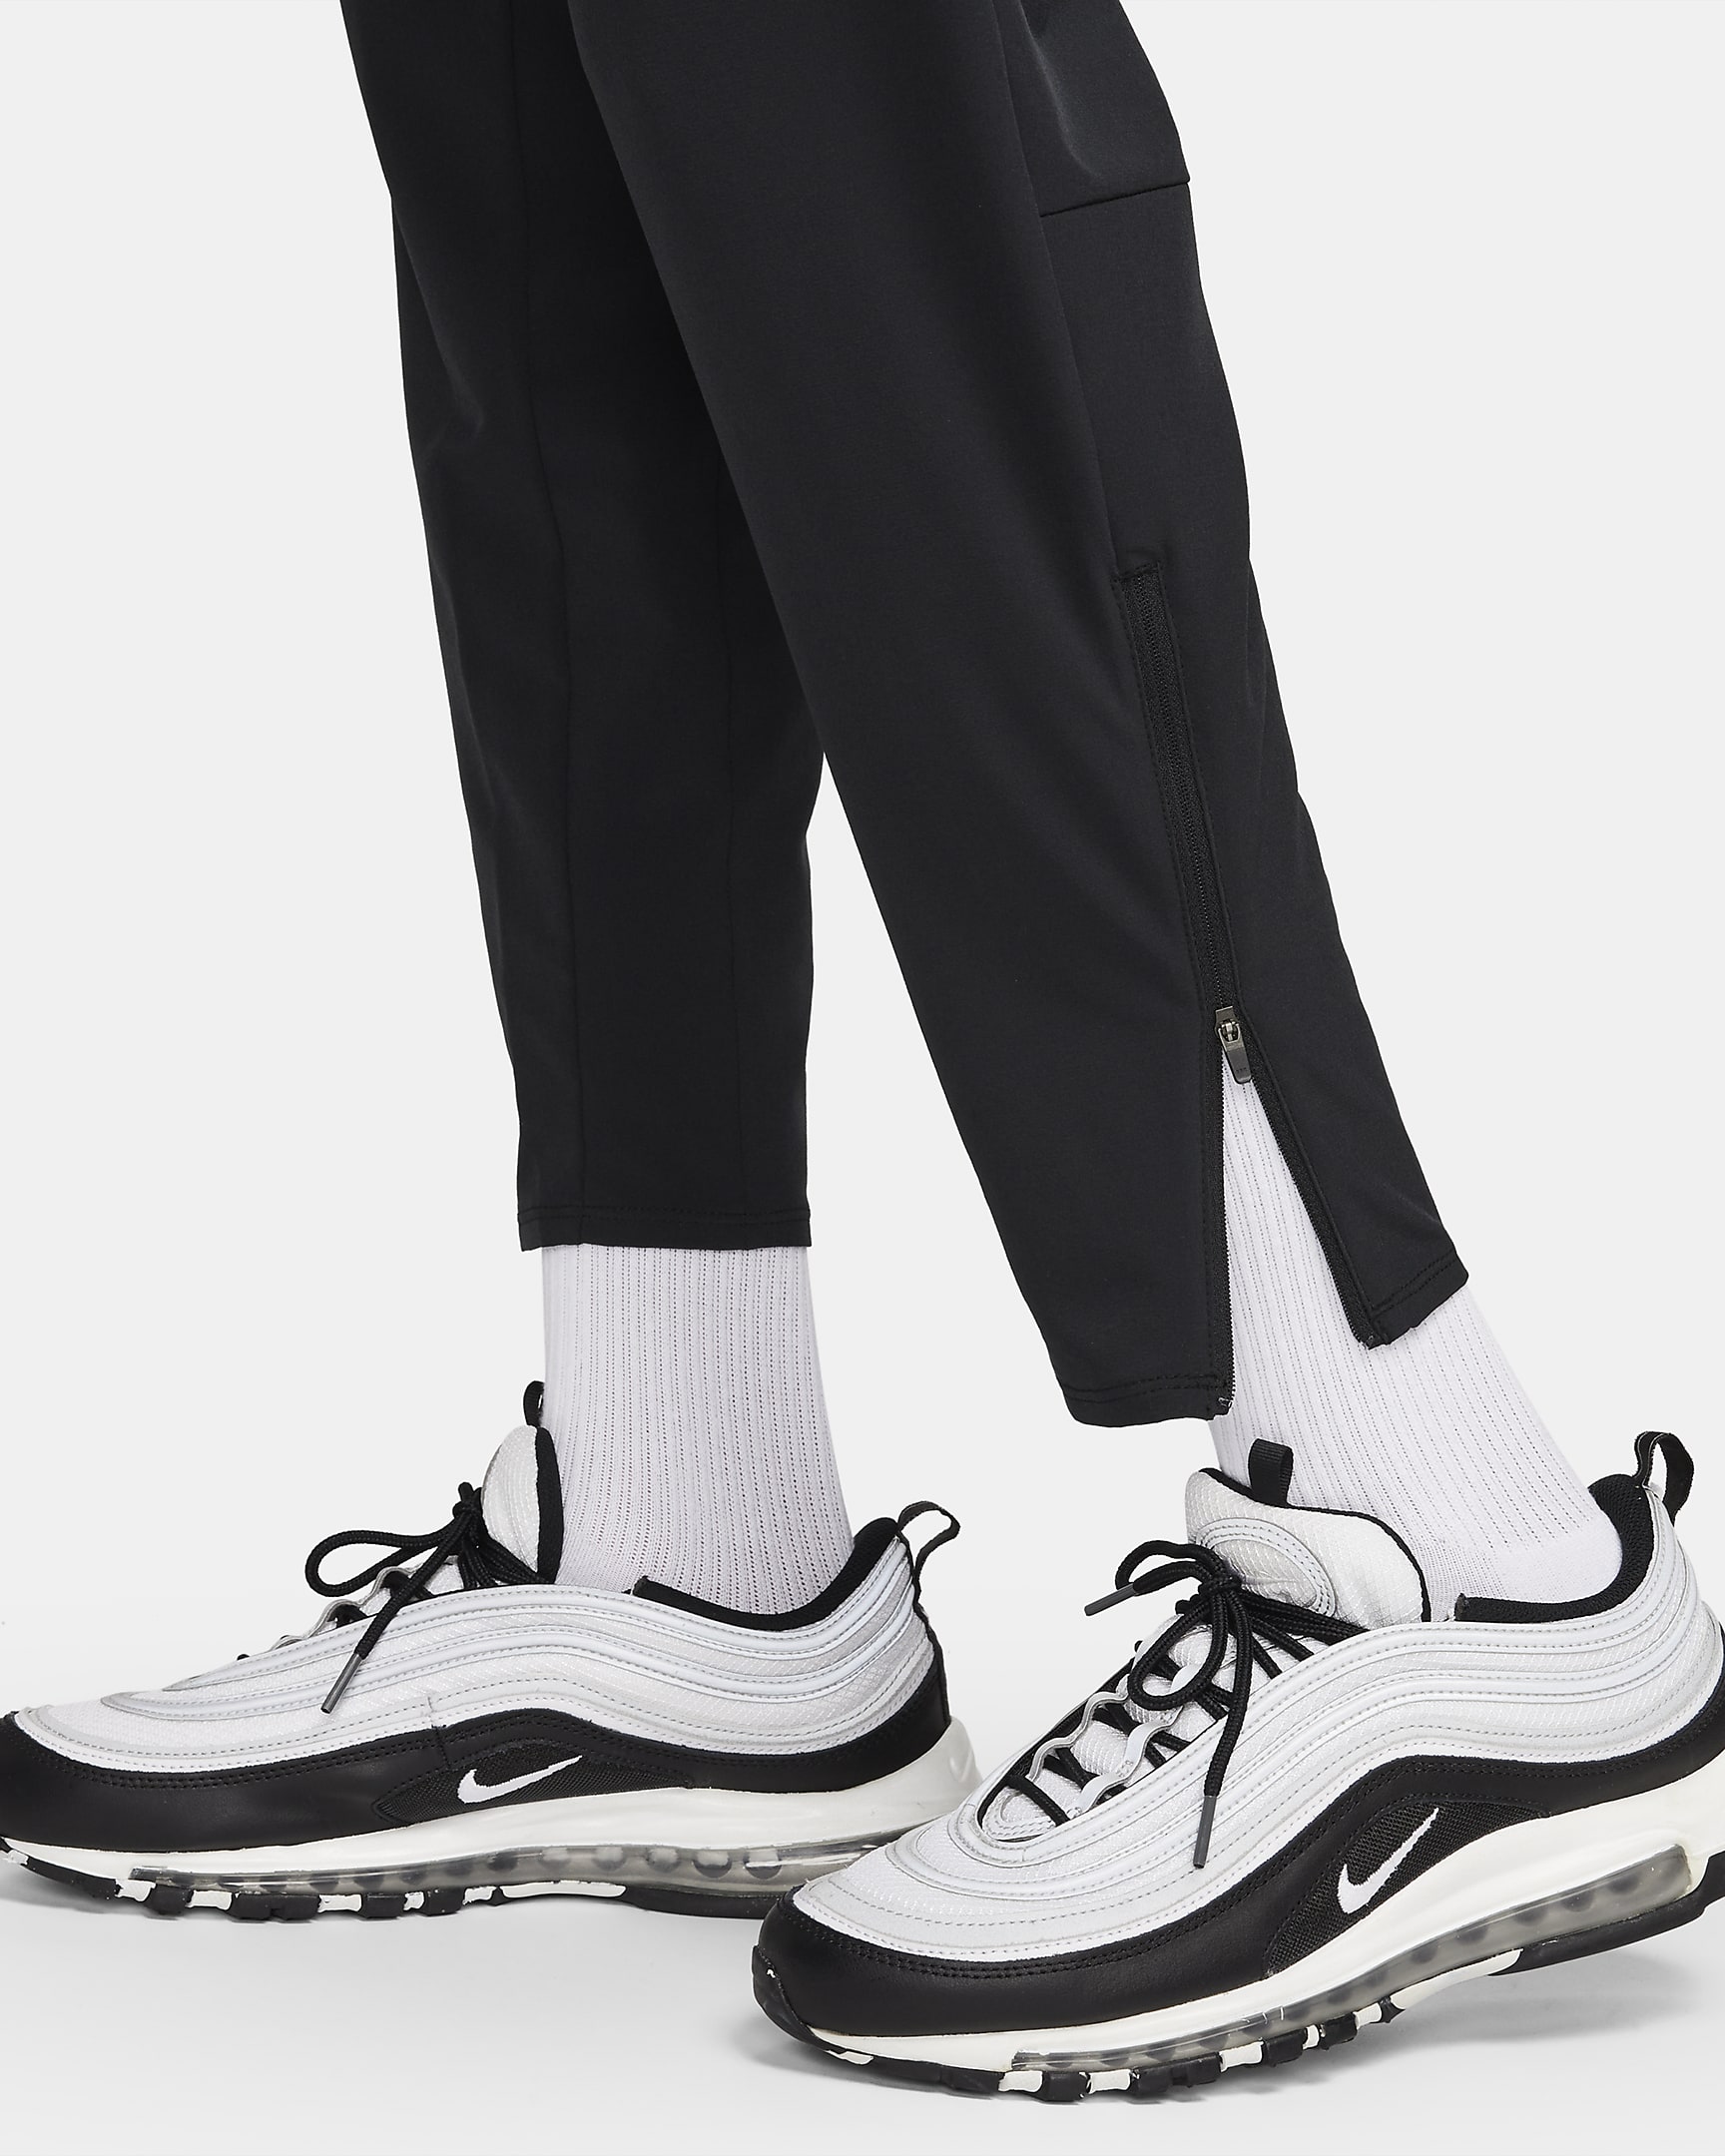 Nike Air Max Men's Woven Trousers. Nike AT